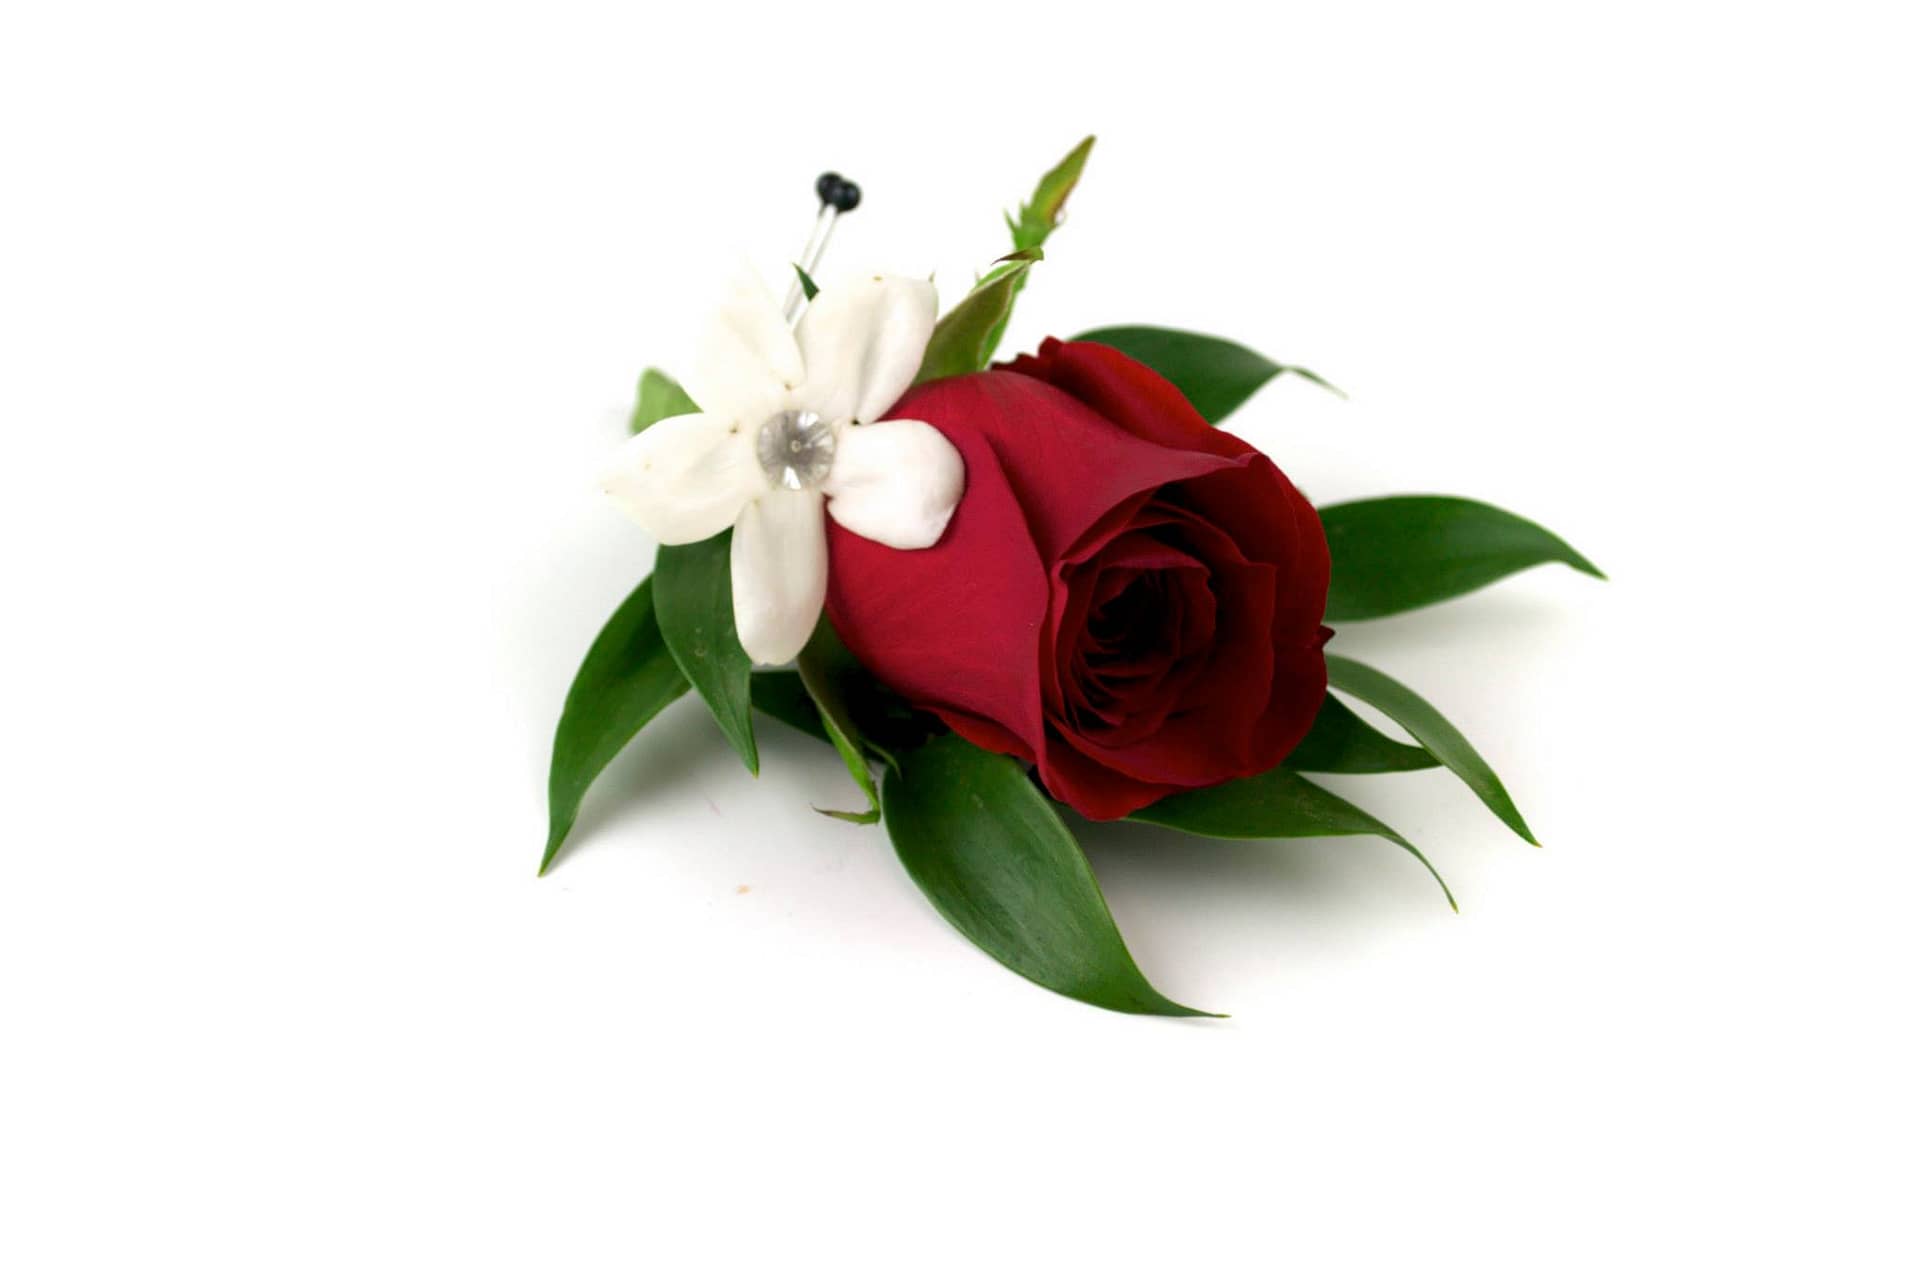 minneapolis-florist-wedding-classic-red-rose